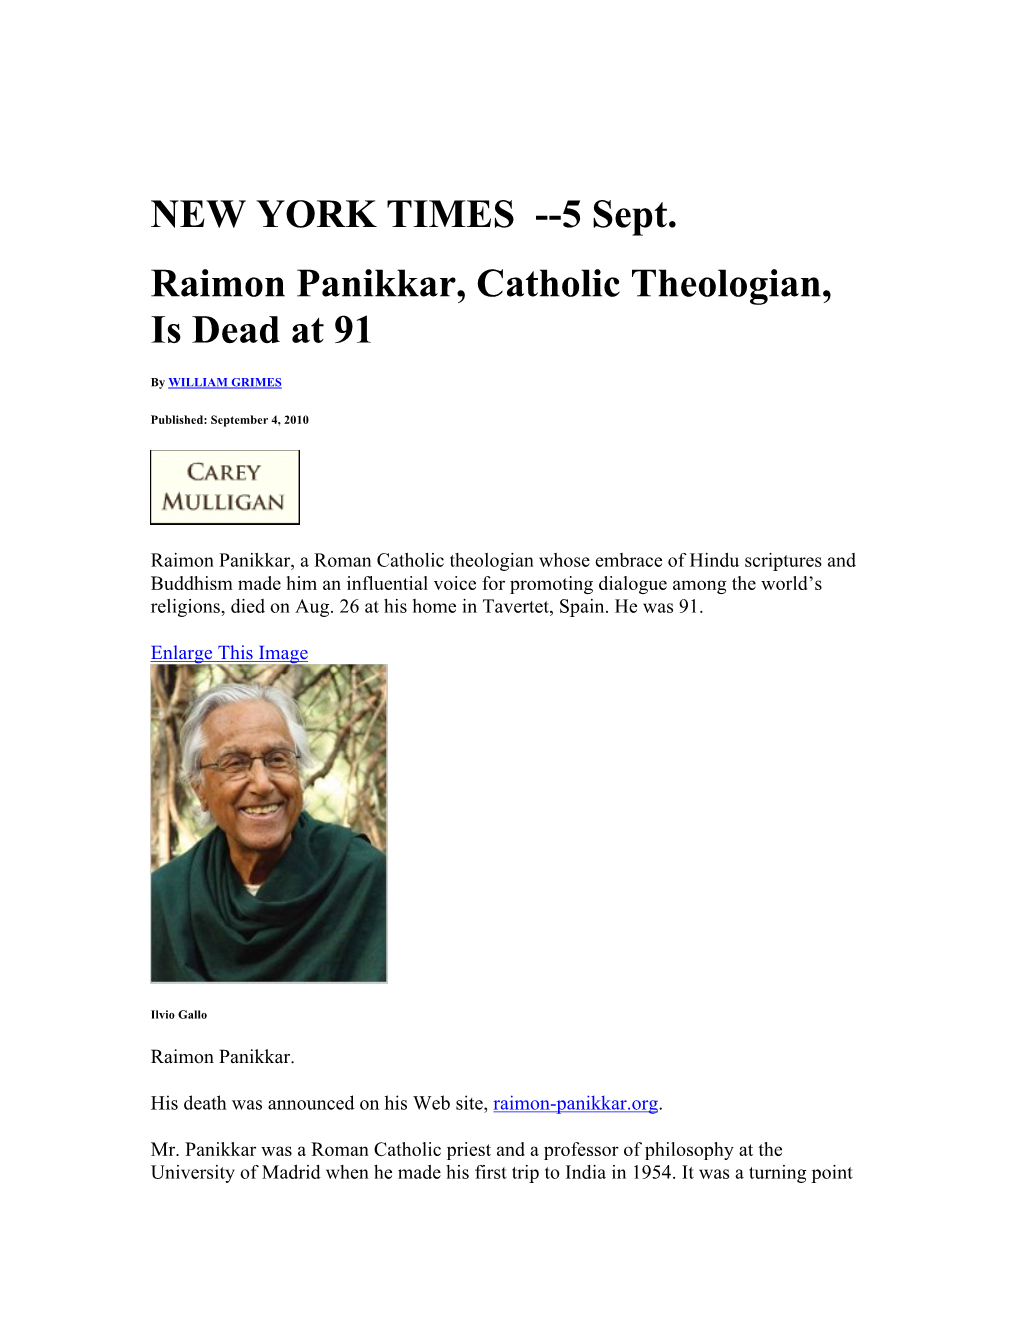 NEW YORK TIMES --5 Sept. Raimon Panikkar, Catholic Theologian, Is Dead at 91